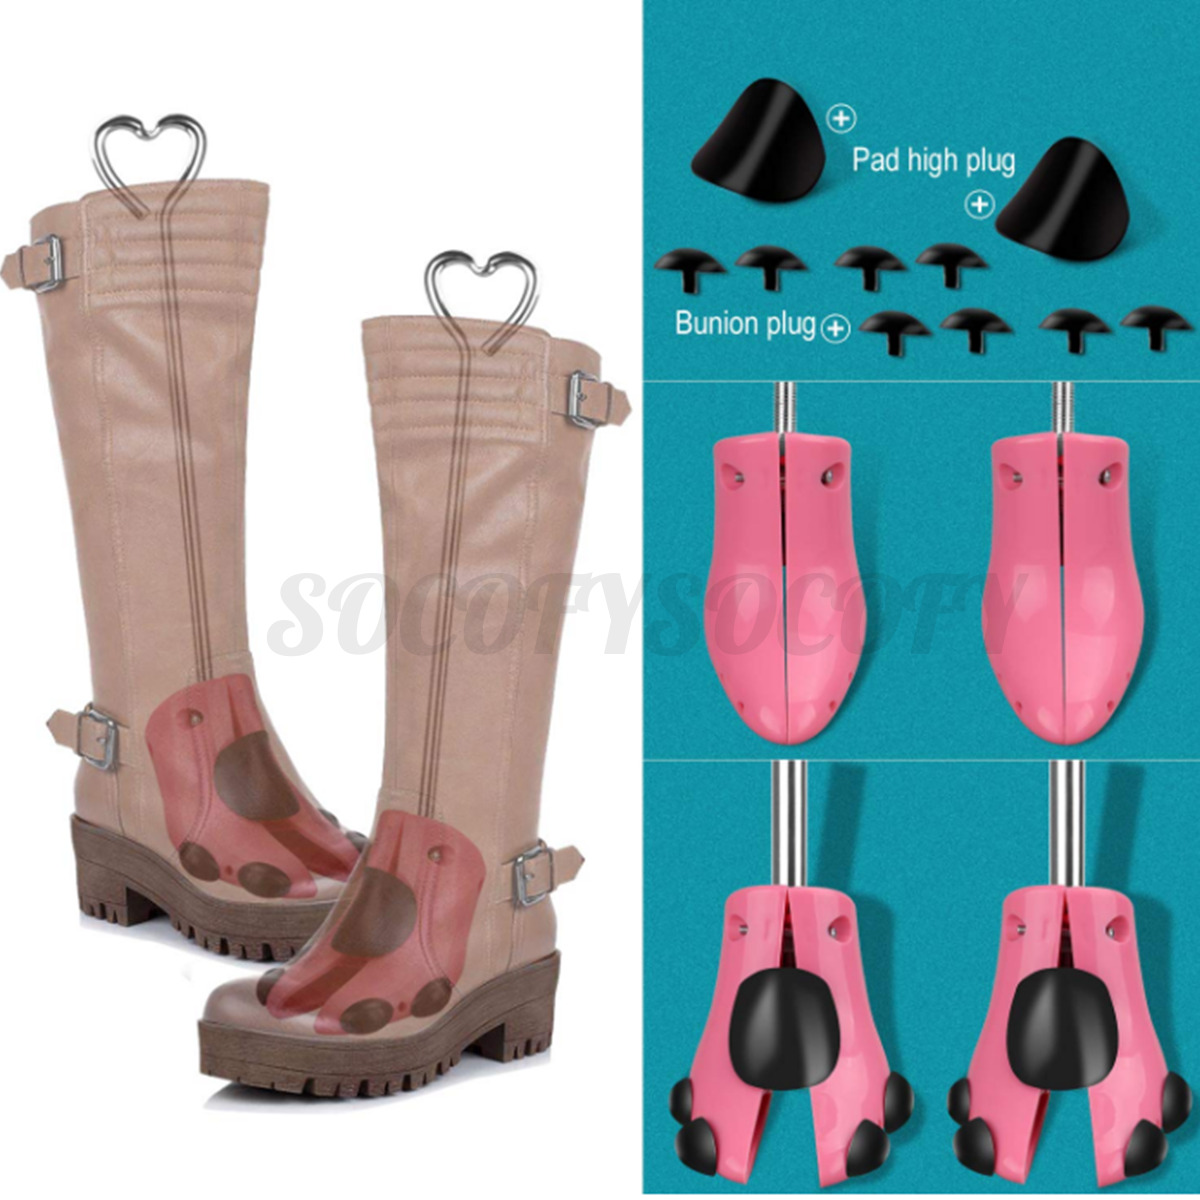 Shoe Stretcher Expander Men Women Adjustable Plastic Shoe Boots Support Shapers